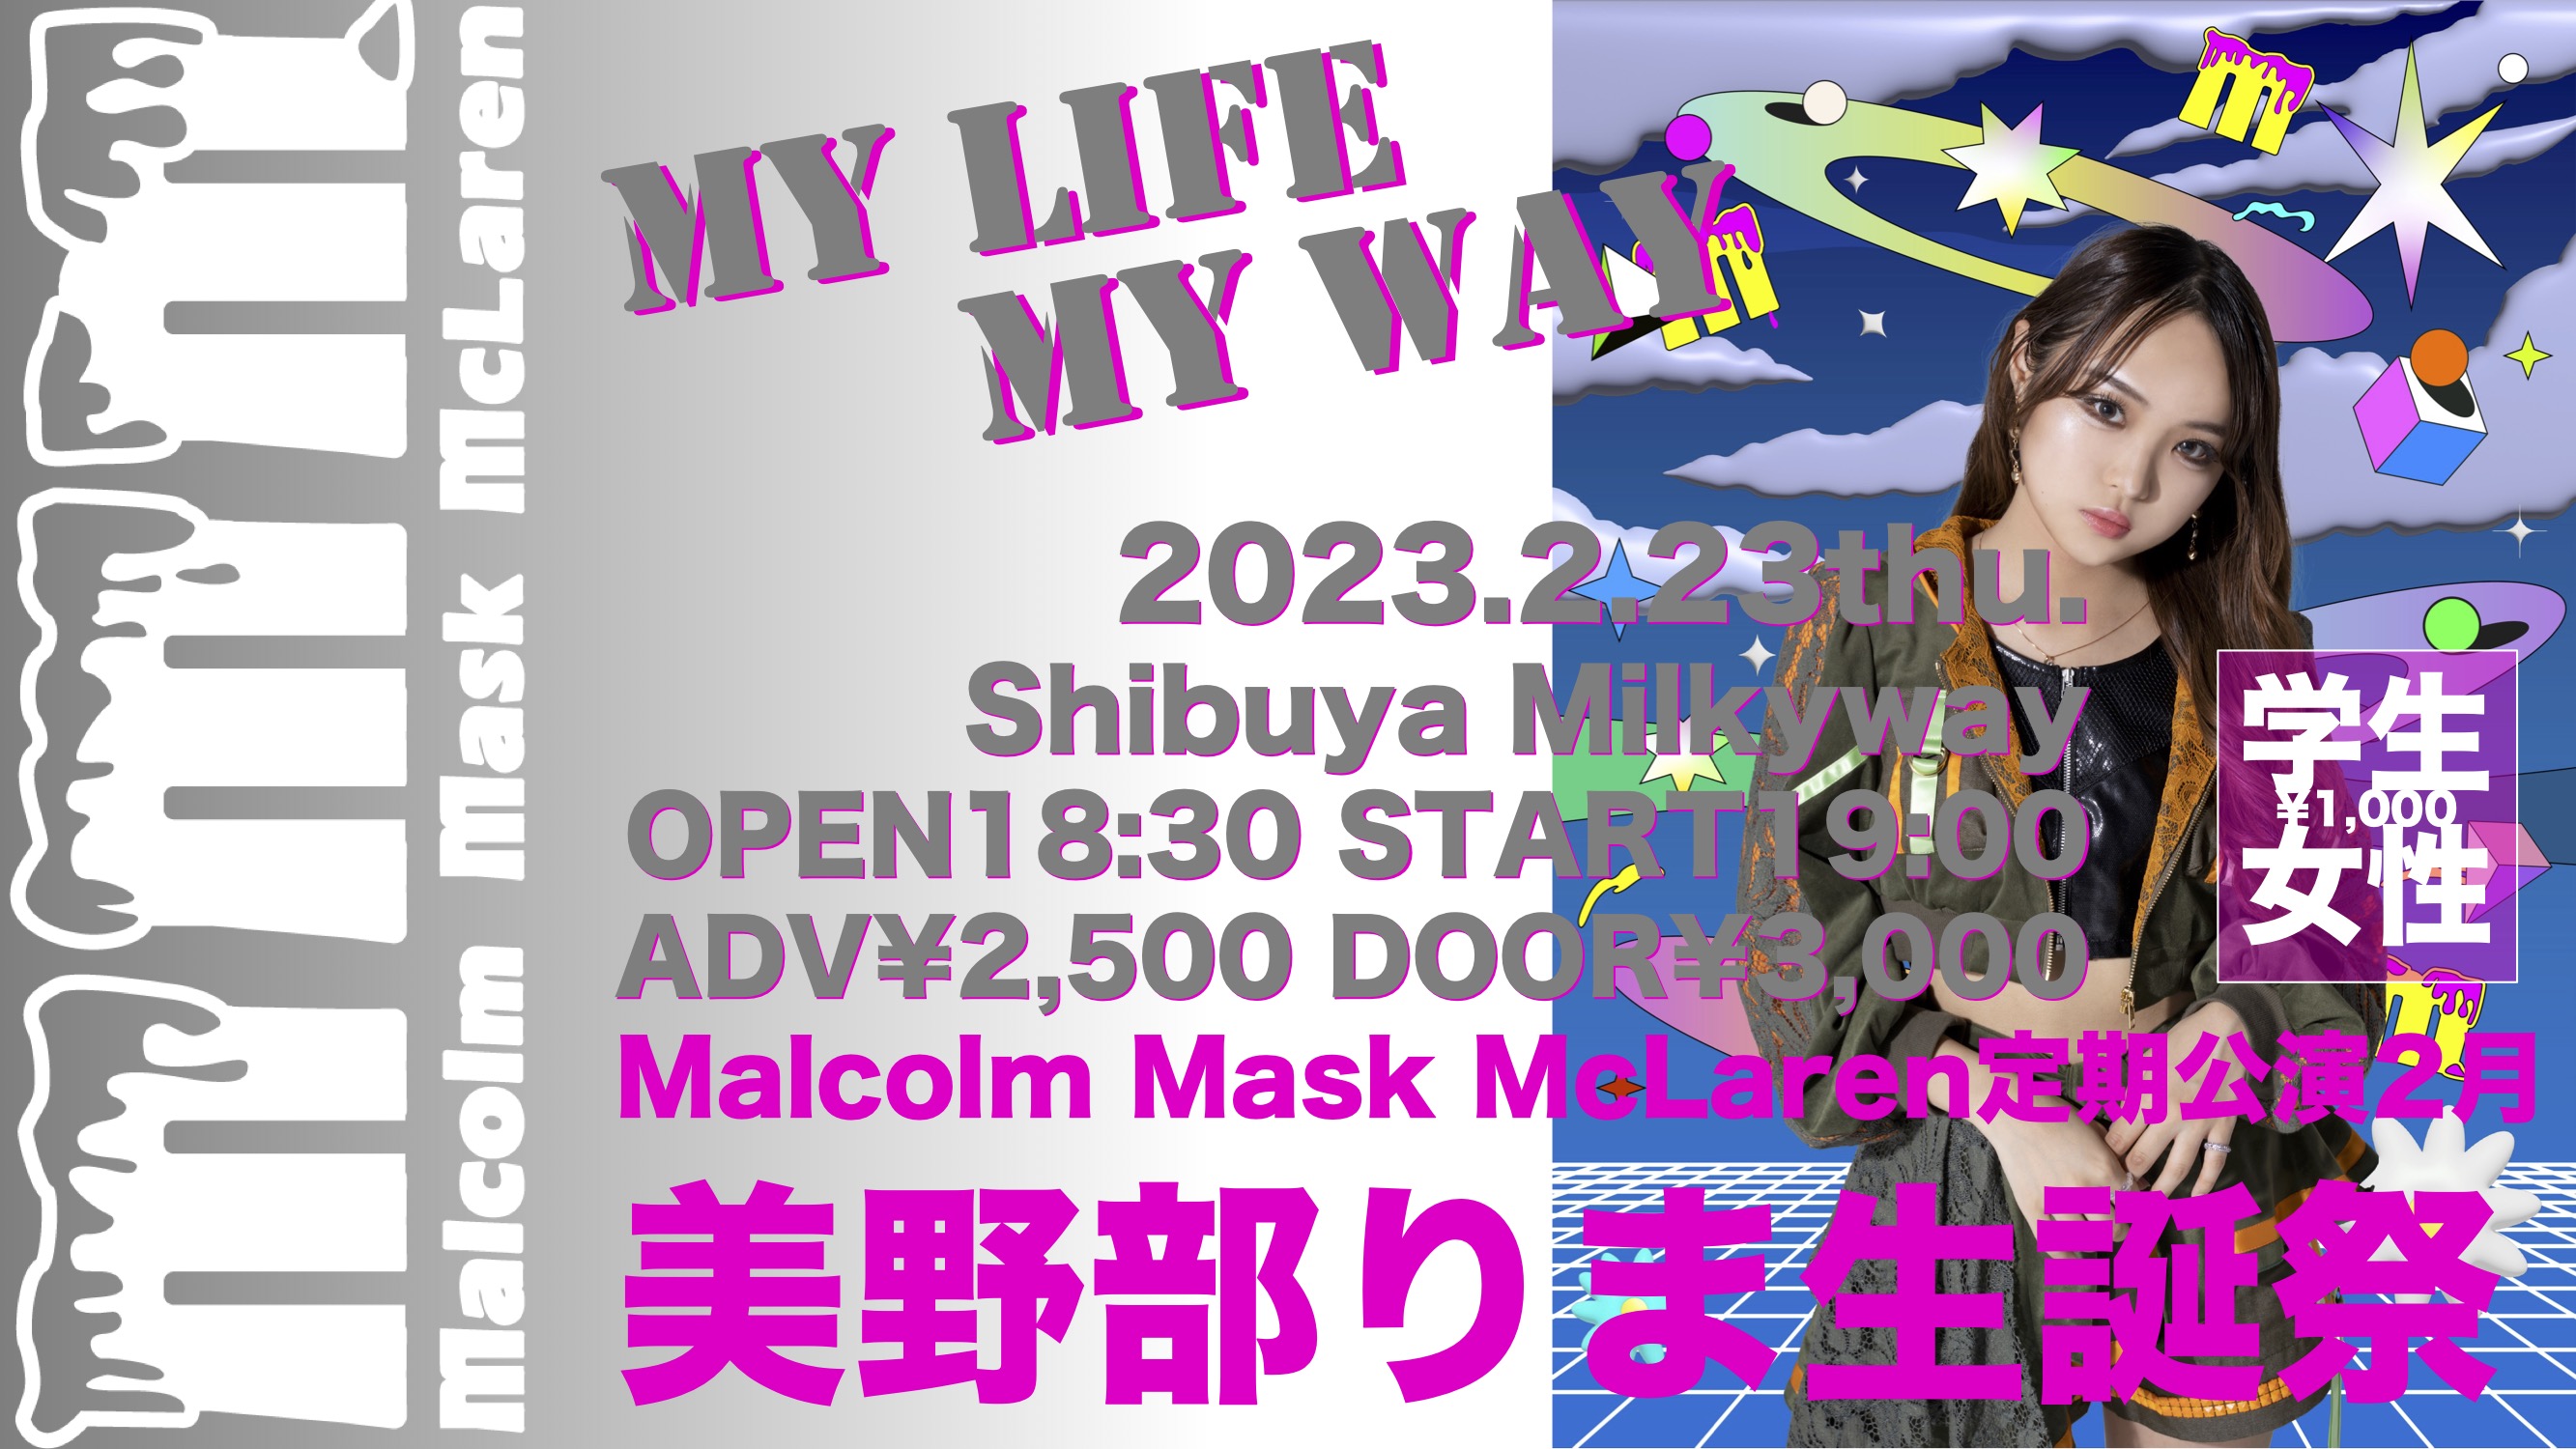 Malcolm Mask McLaren 定期公演 「My Life My Way〜美野部りま生誕祭〜」